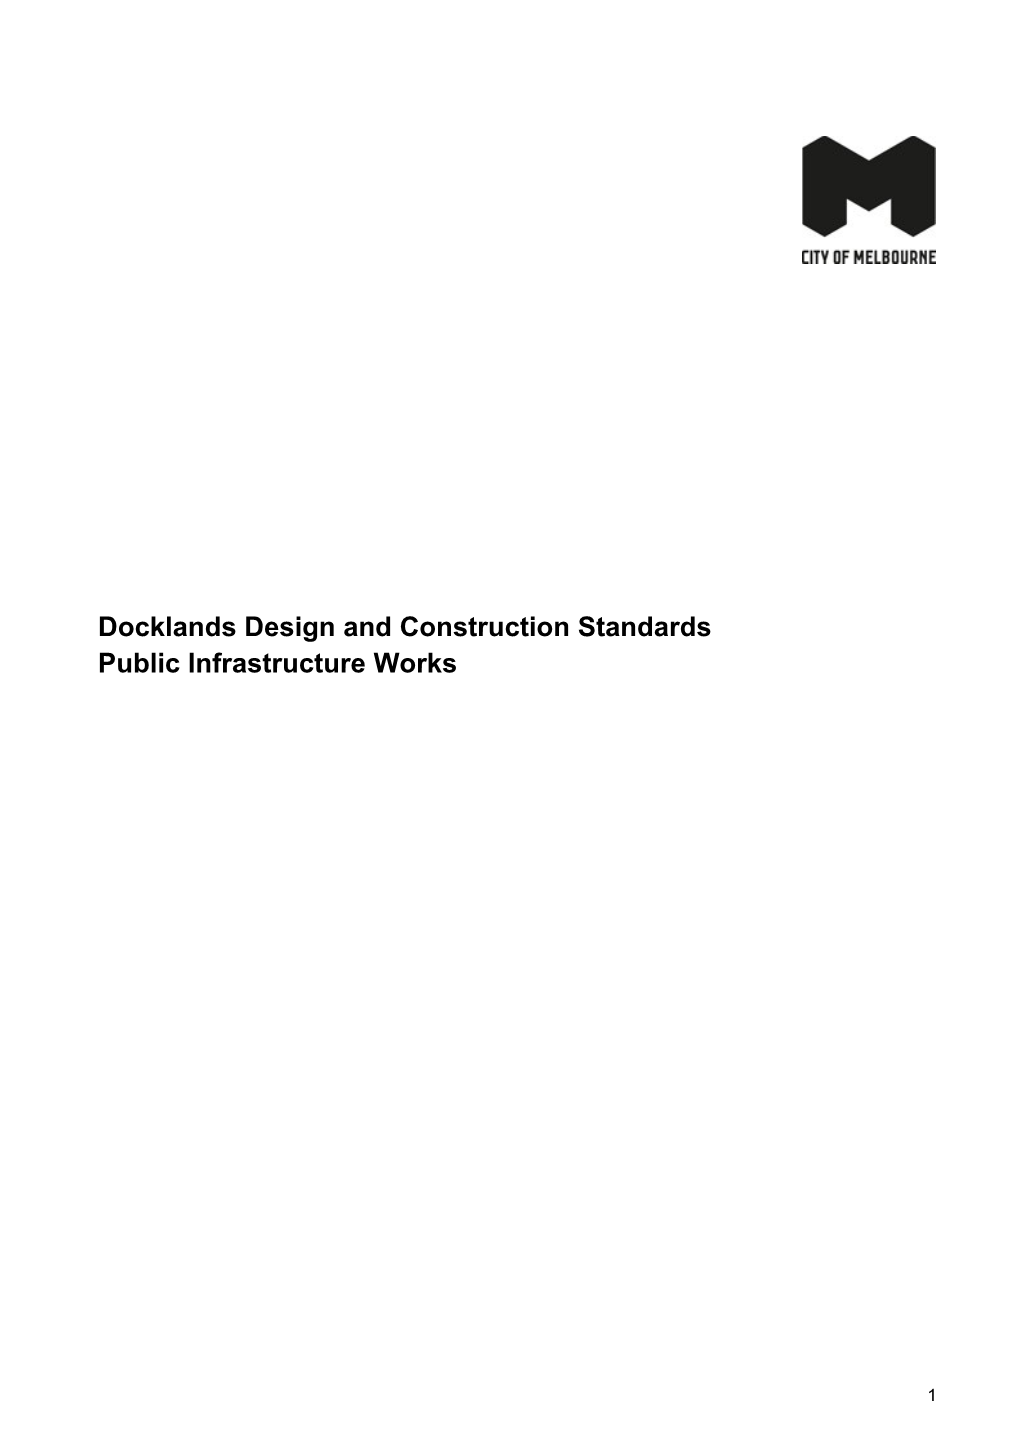 Docklands Design and Construction Standards s1